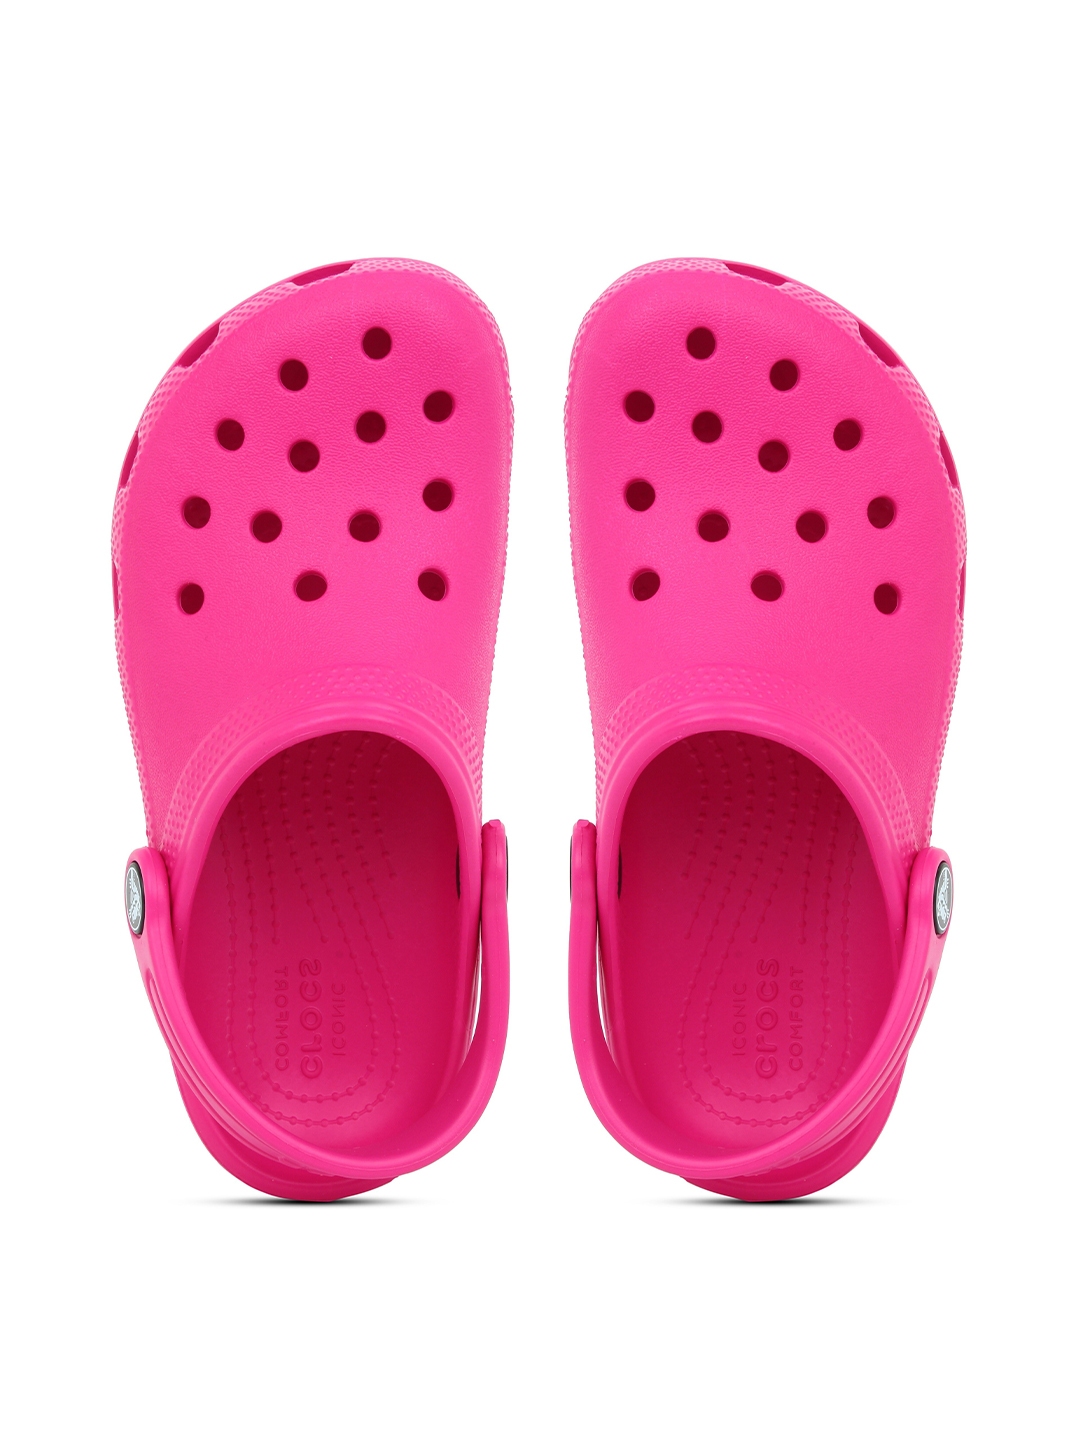 Buy Crocs Unisex Kids Pink Solid Clogs - Flip Flops for Unisex Kids ...